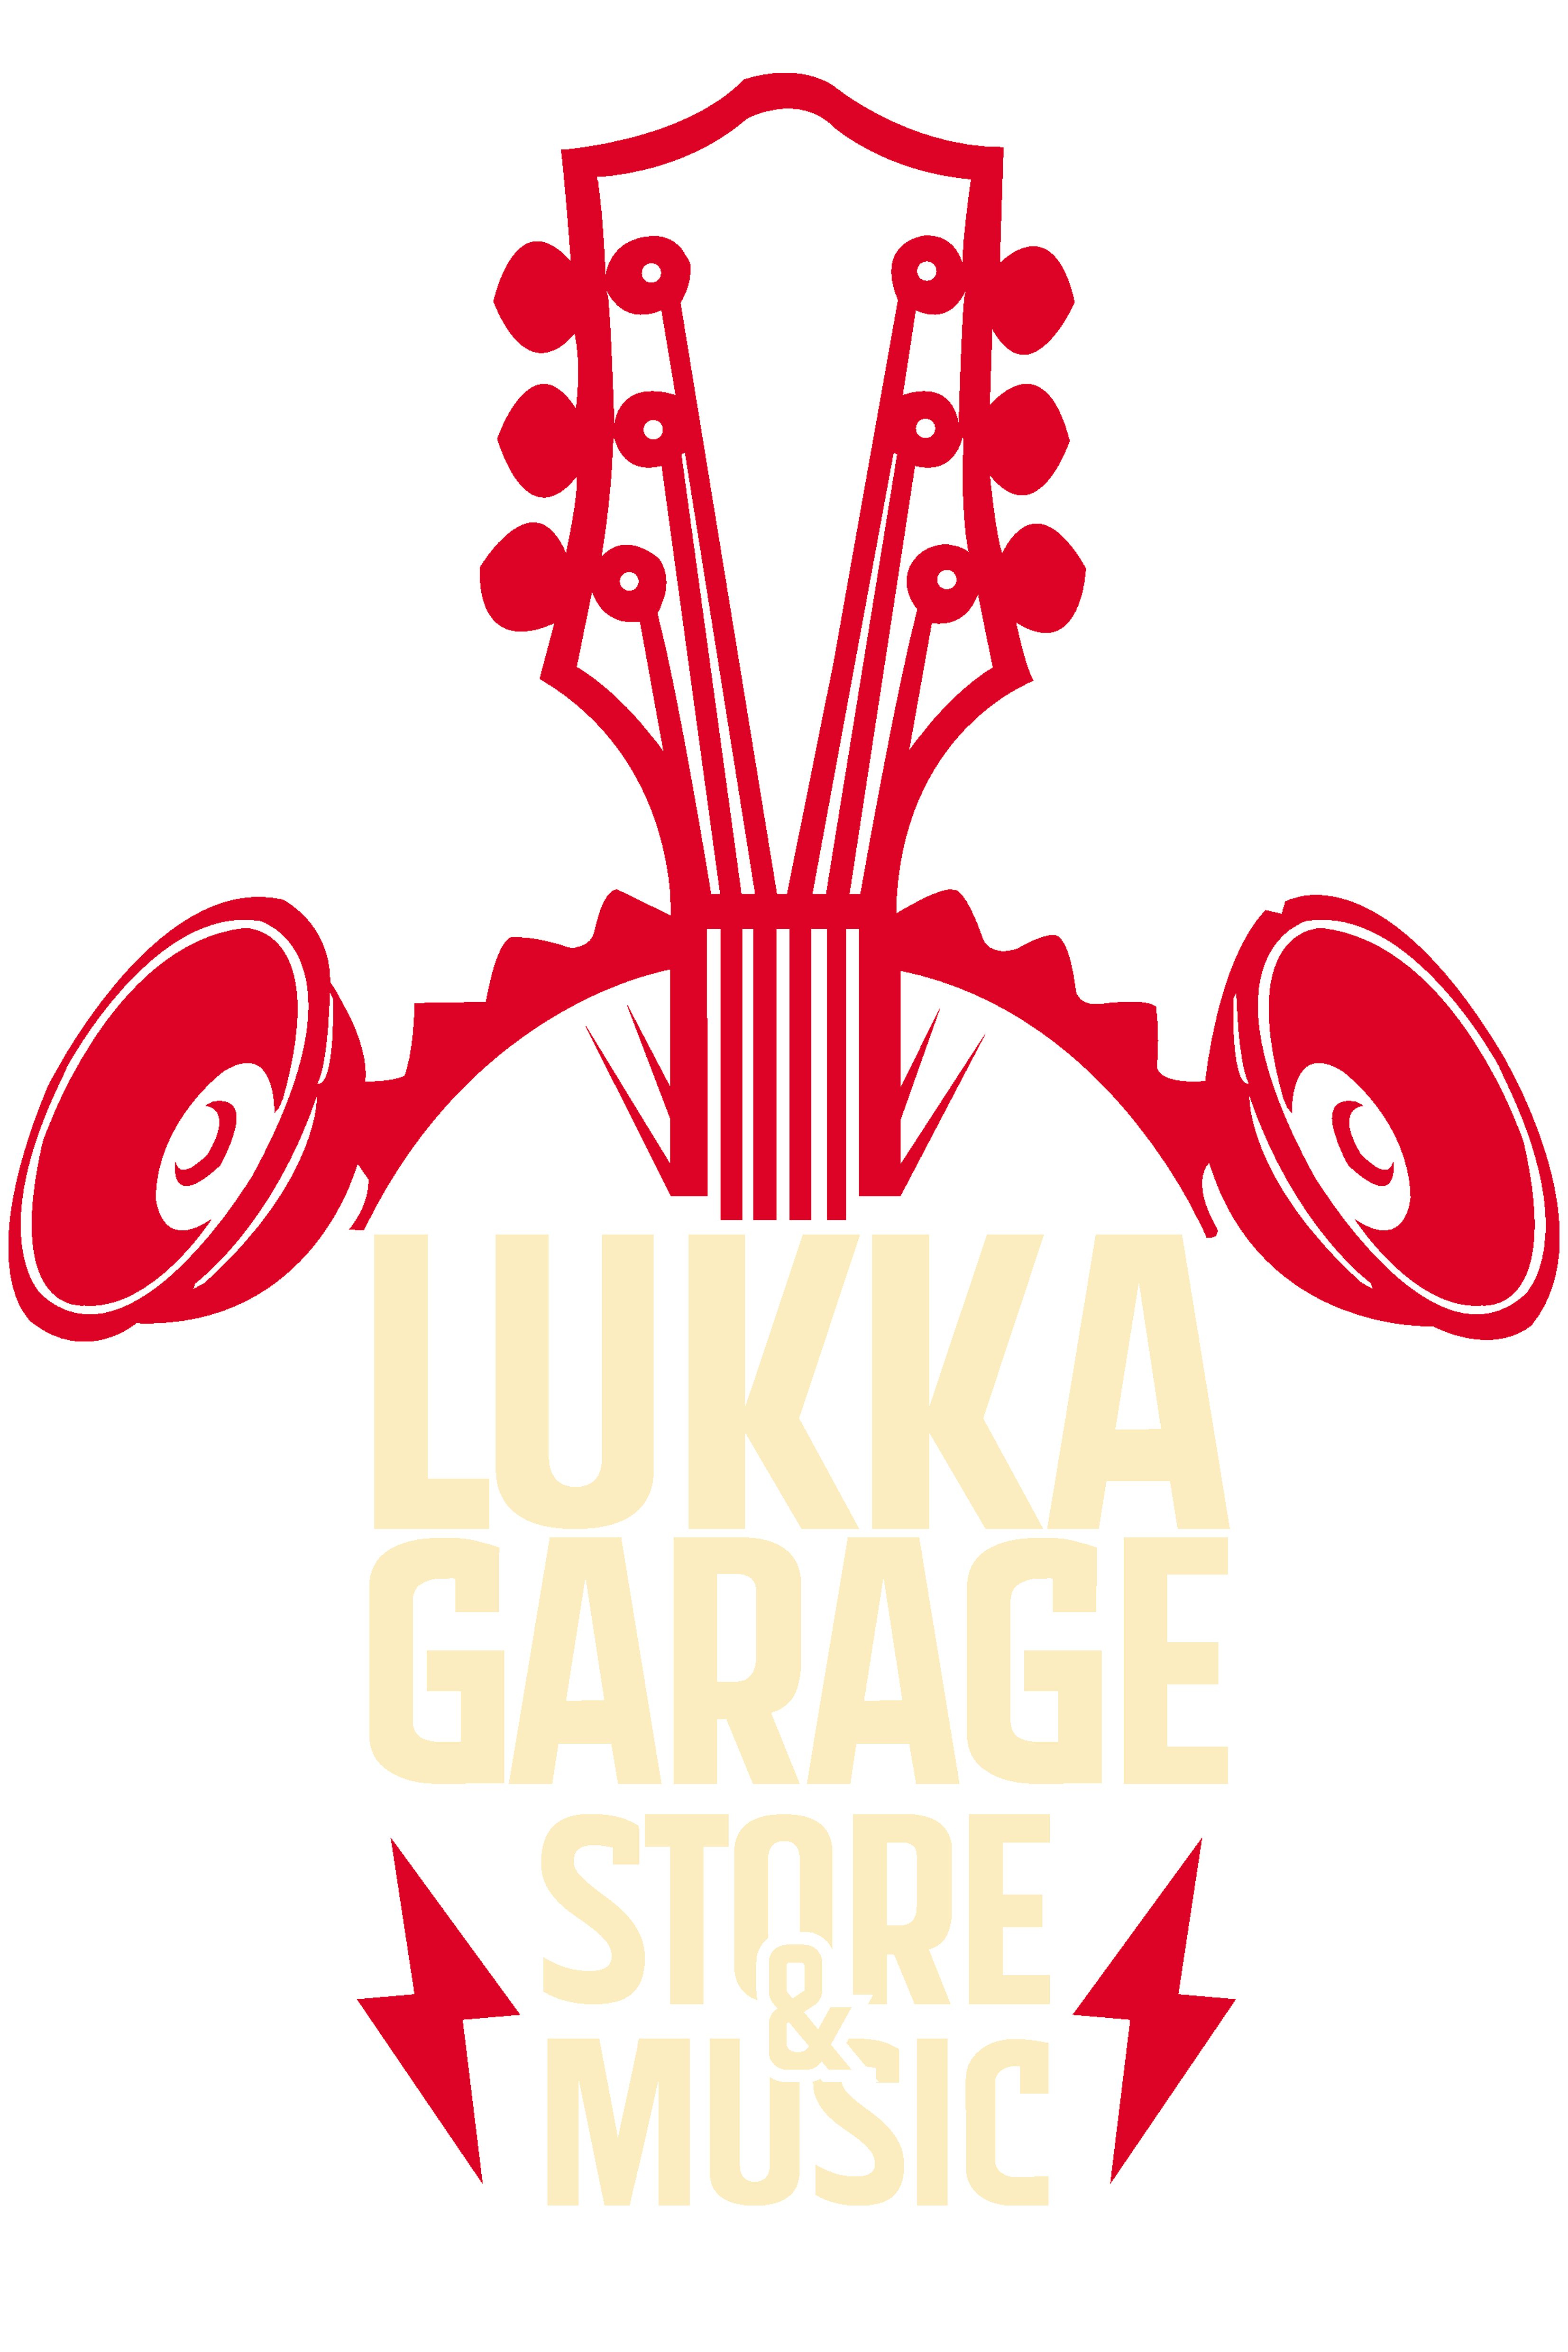 lukka garage